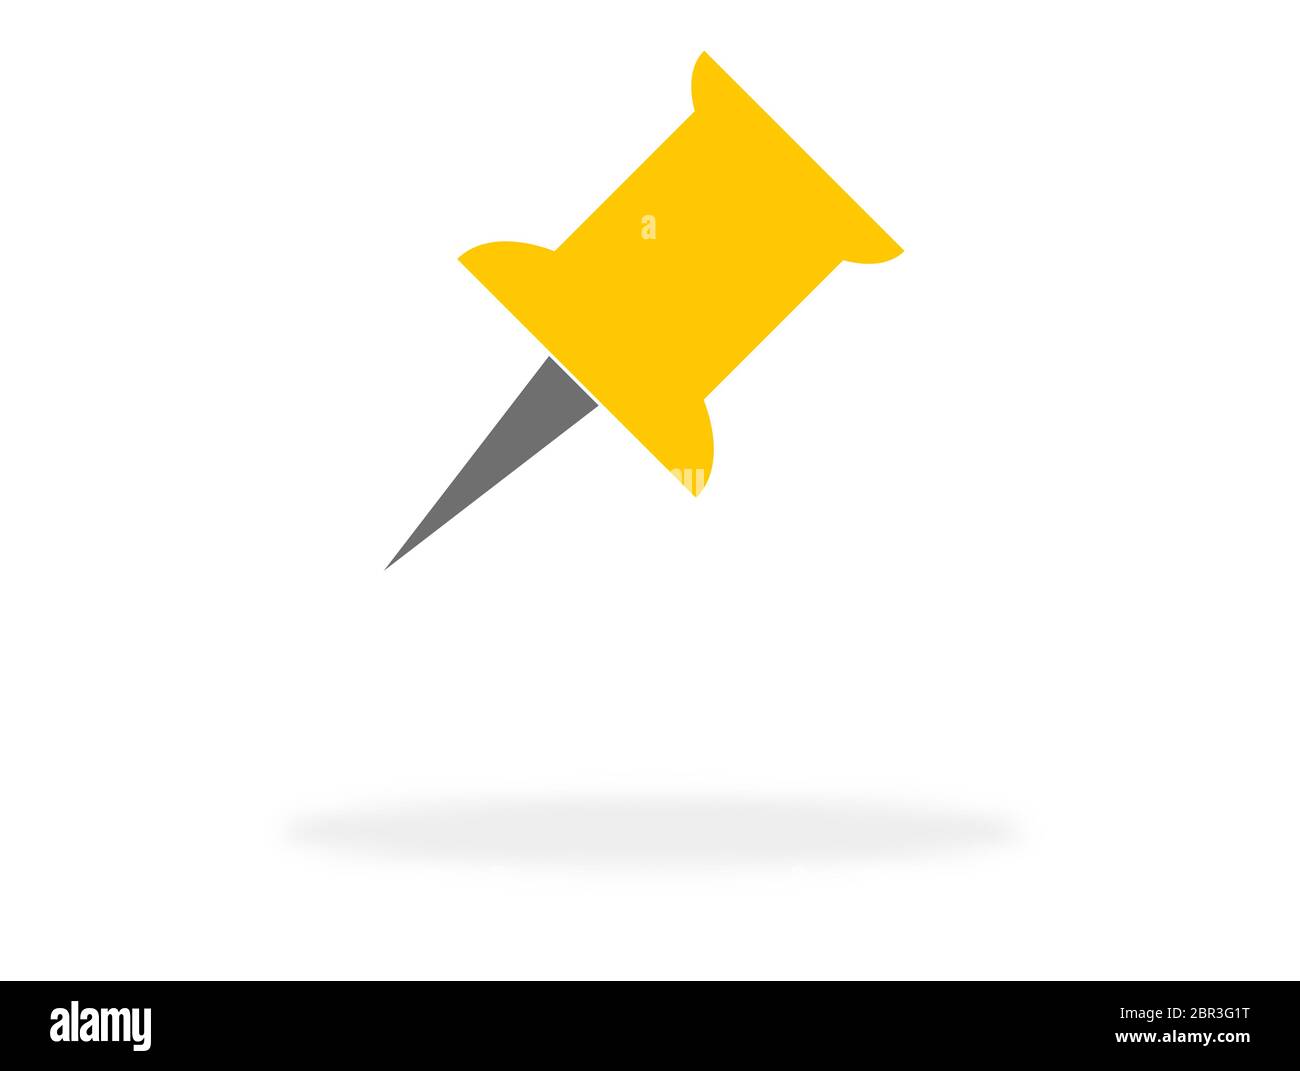 Icono de aguja de color naranja: Símbolo de recordatorio, nota o aviso